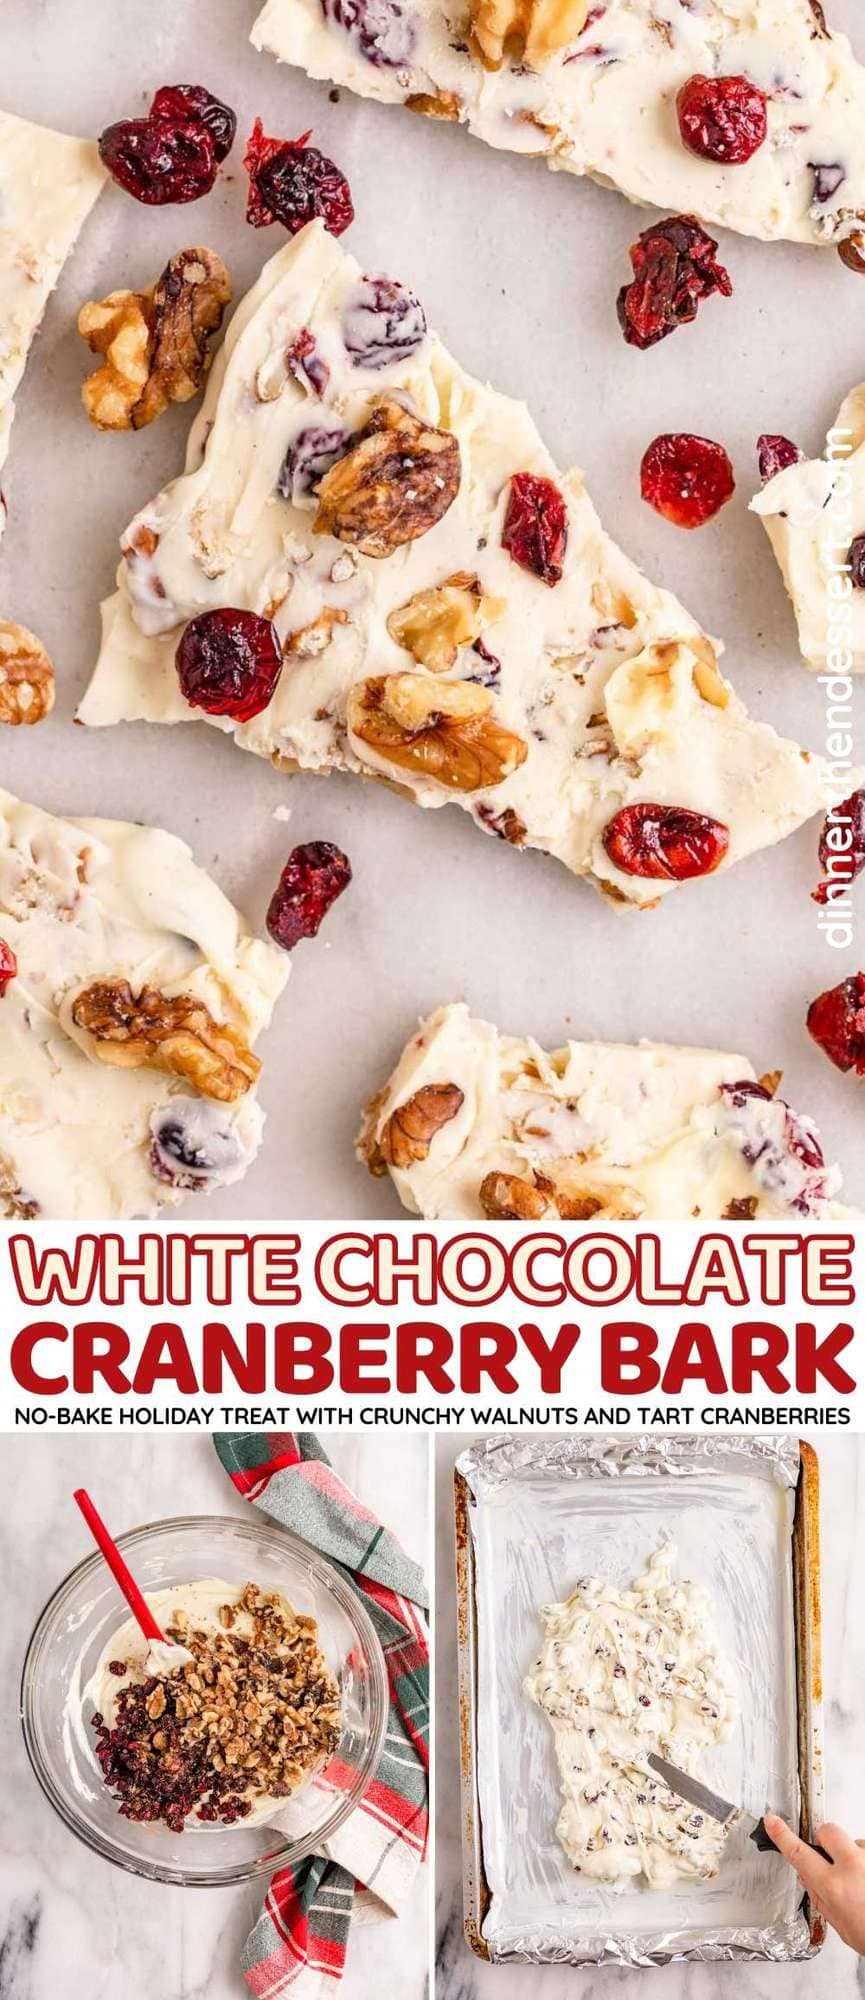 White Chocolate Cranberry Bark collage